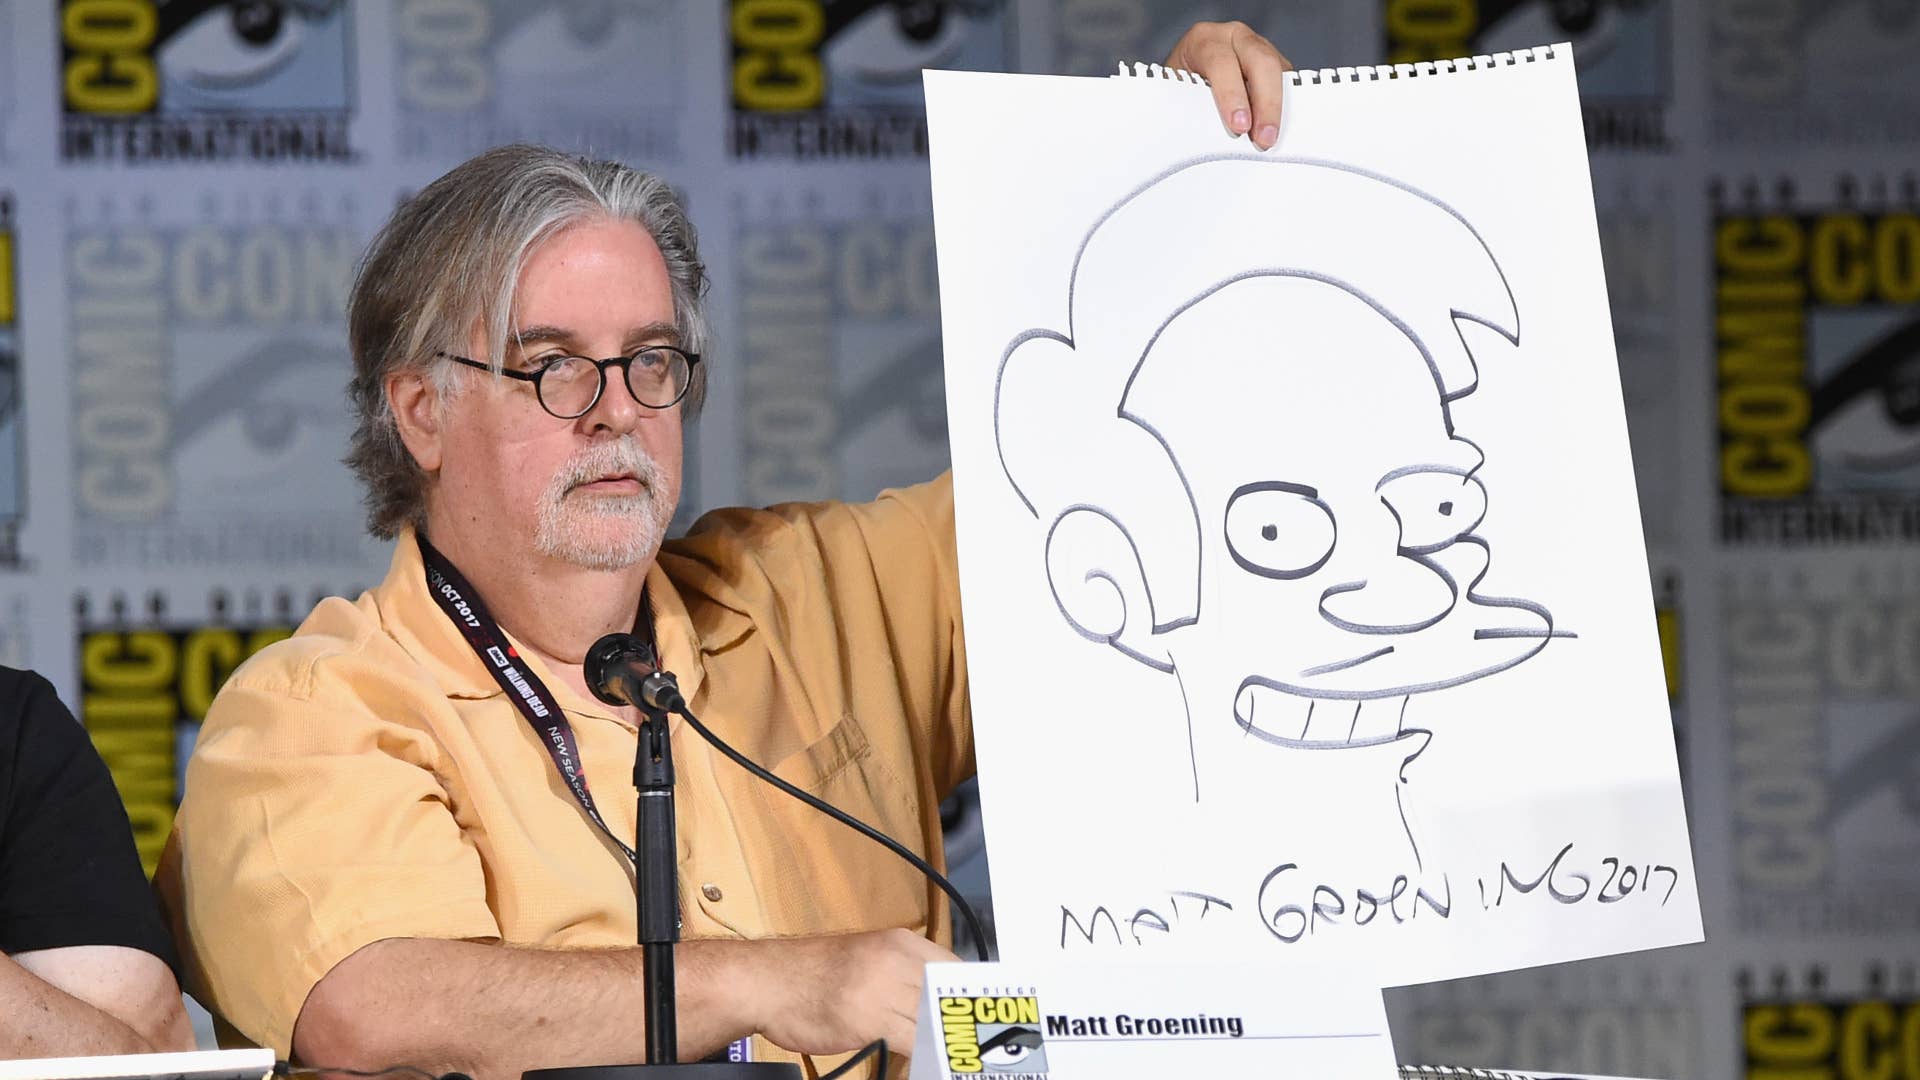 Matt Groening attends "The Simpsons" panel during Comic Con International 2017.